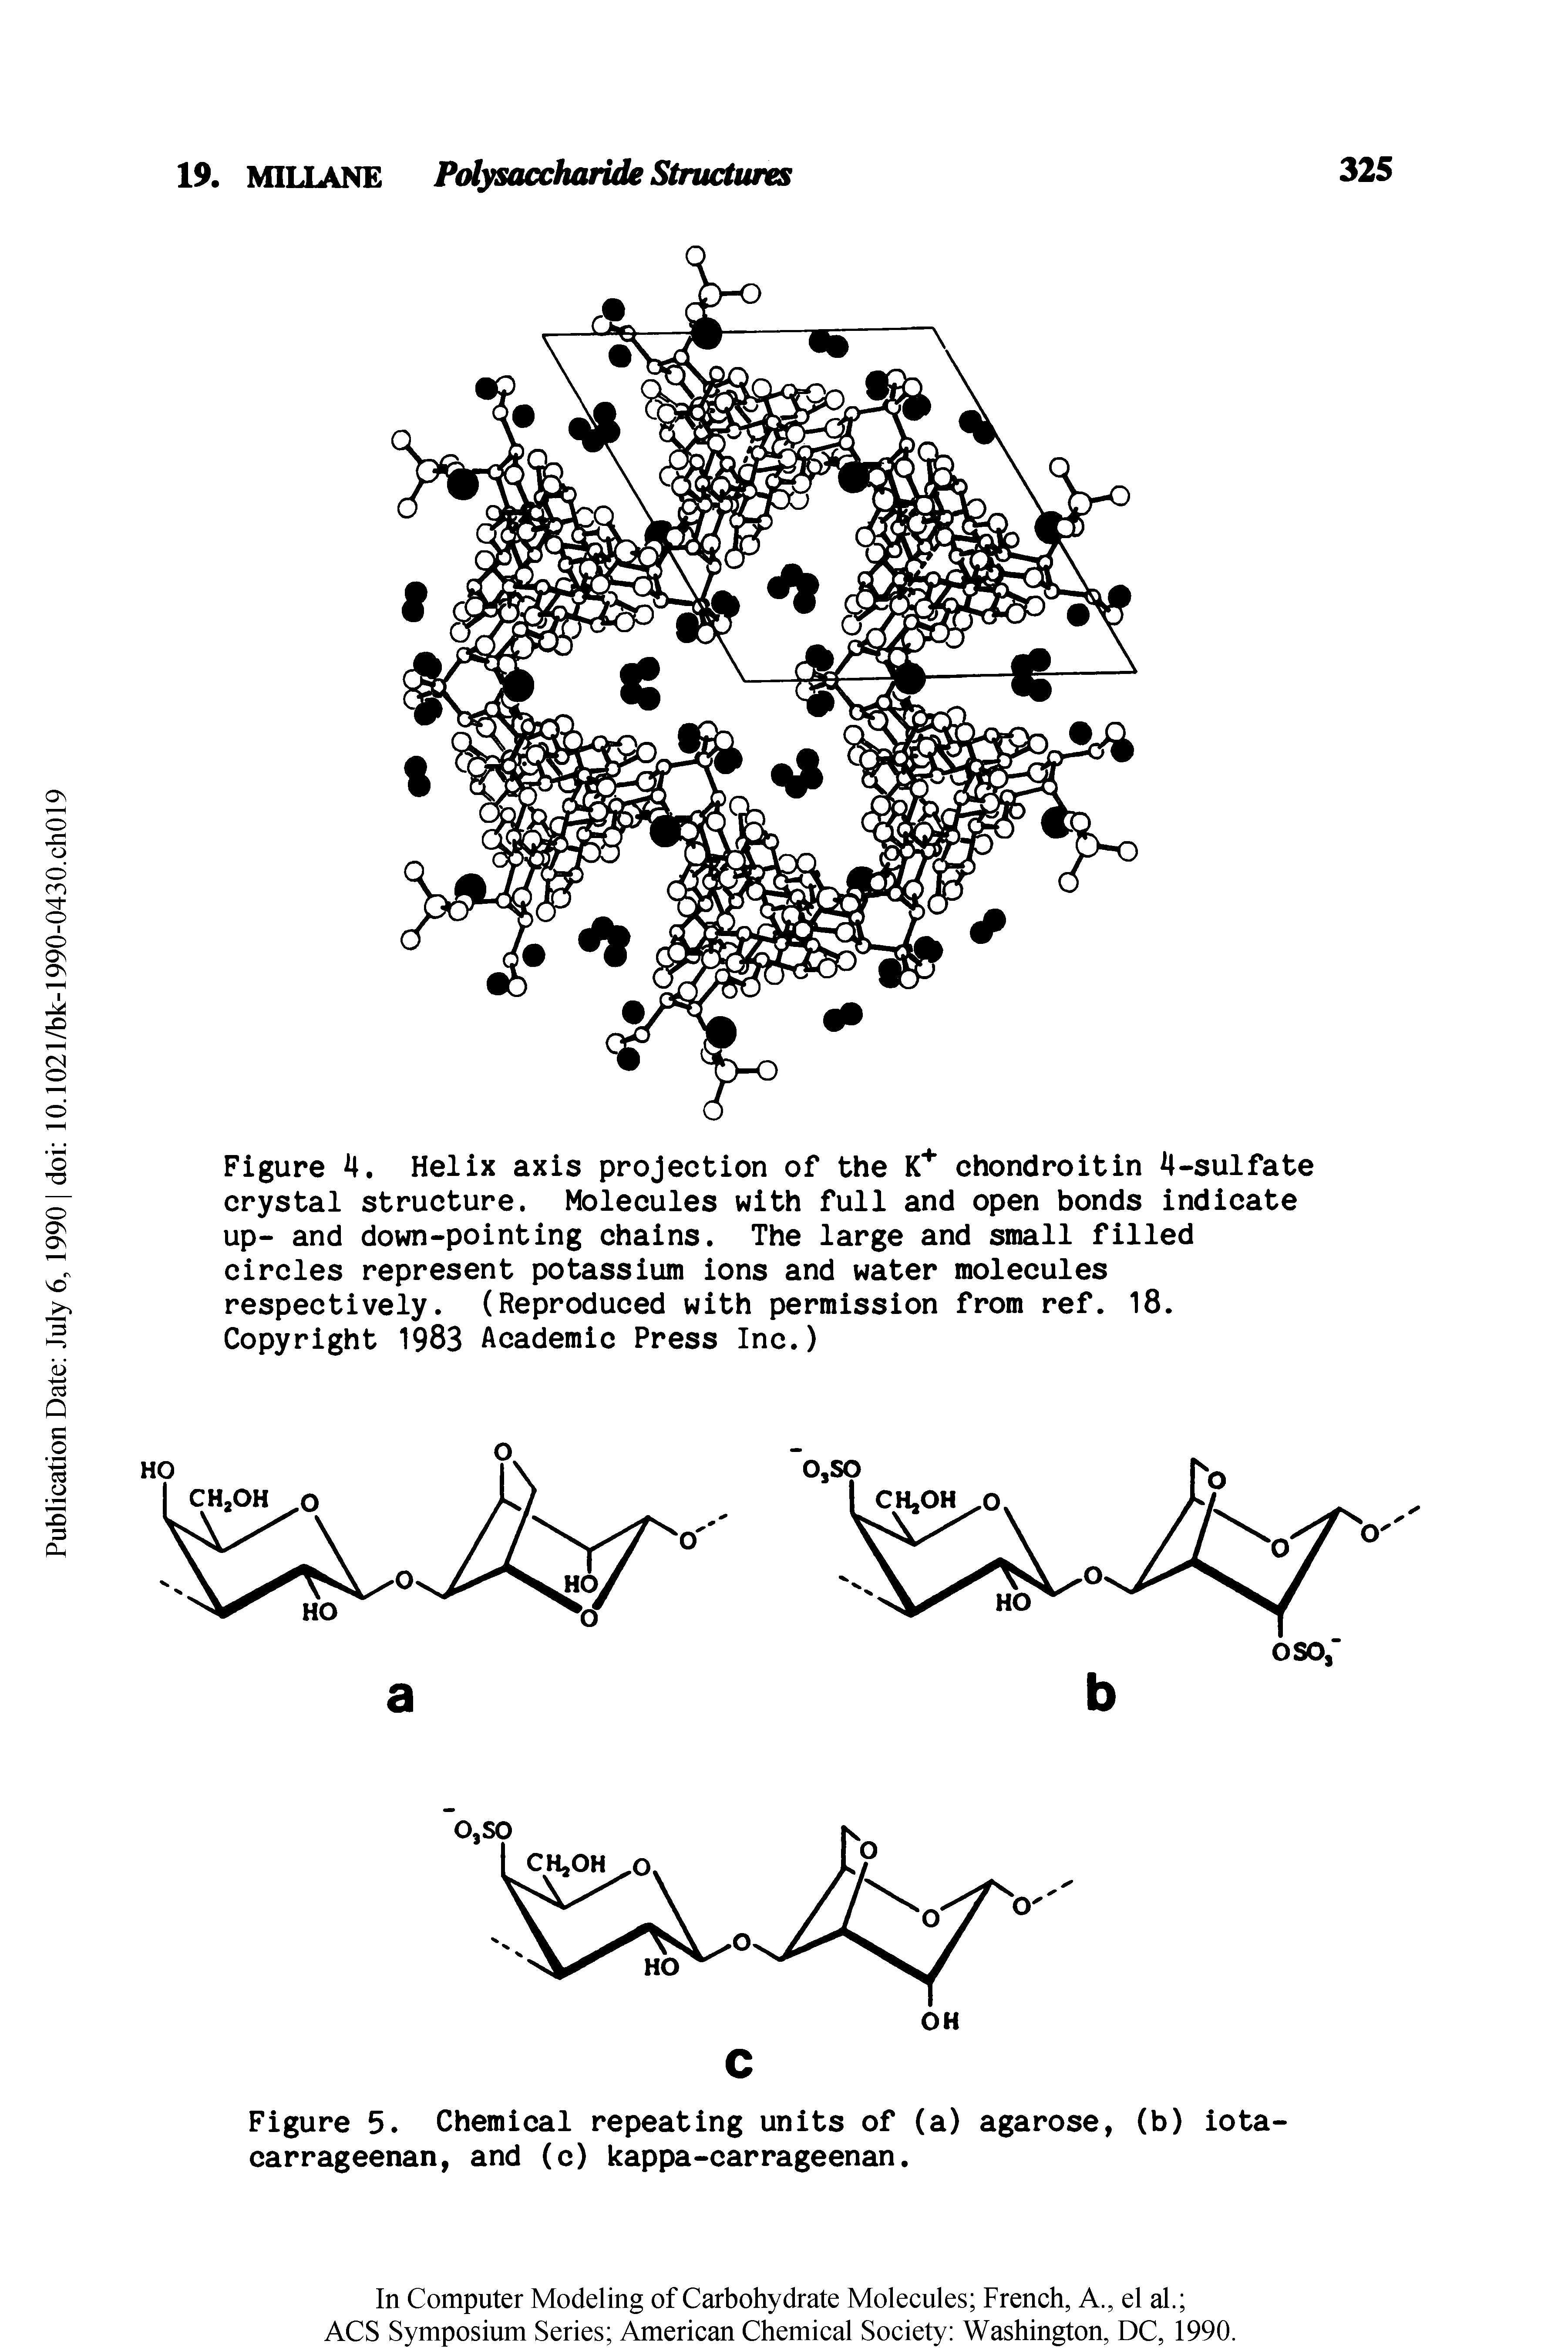 Figure 5. Chemical repeating units of (a) agarose, (b) iota-carrageenan, and (c) kappa-carrageenan.